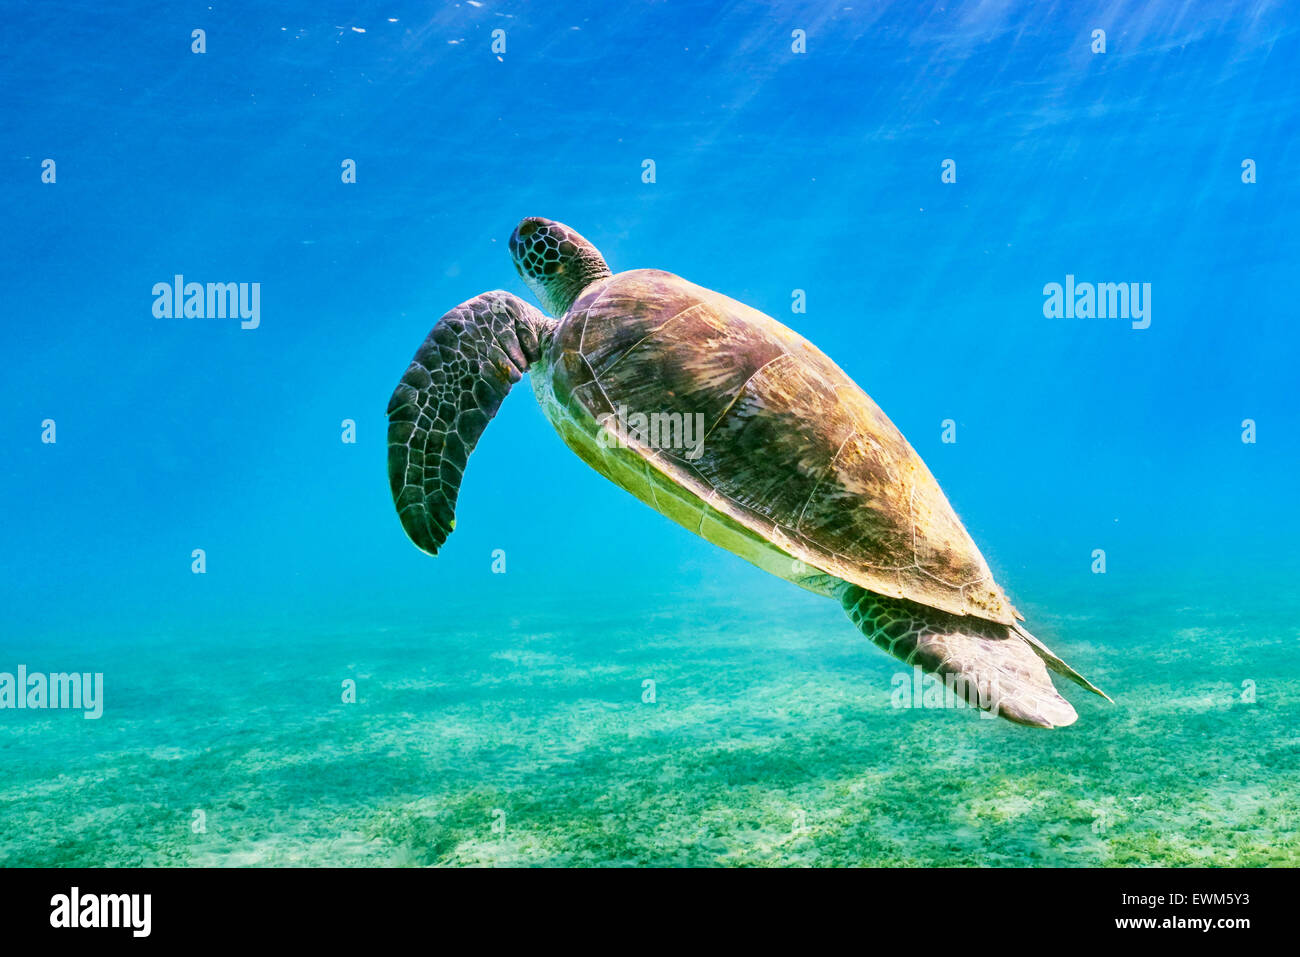 Marsa Alam, Red Sea, Egypt - vue sous-marine en mer Turtle Banque D'Images